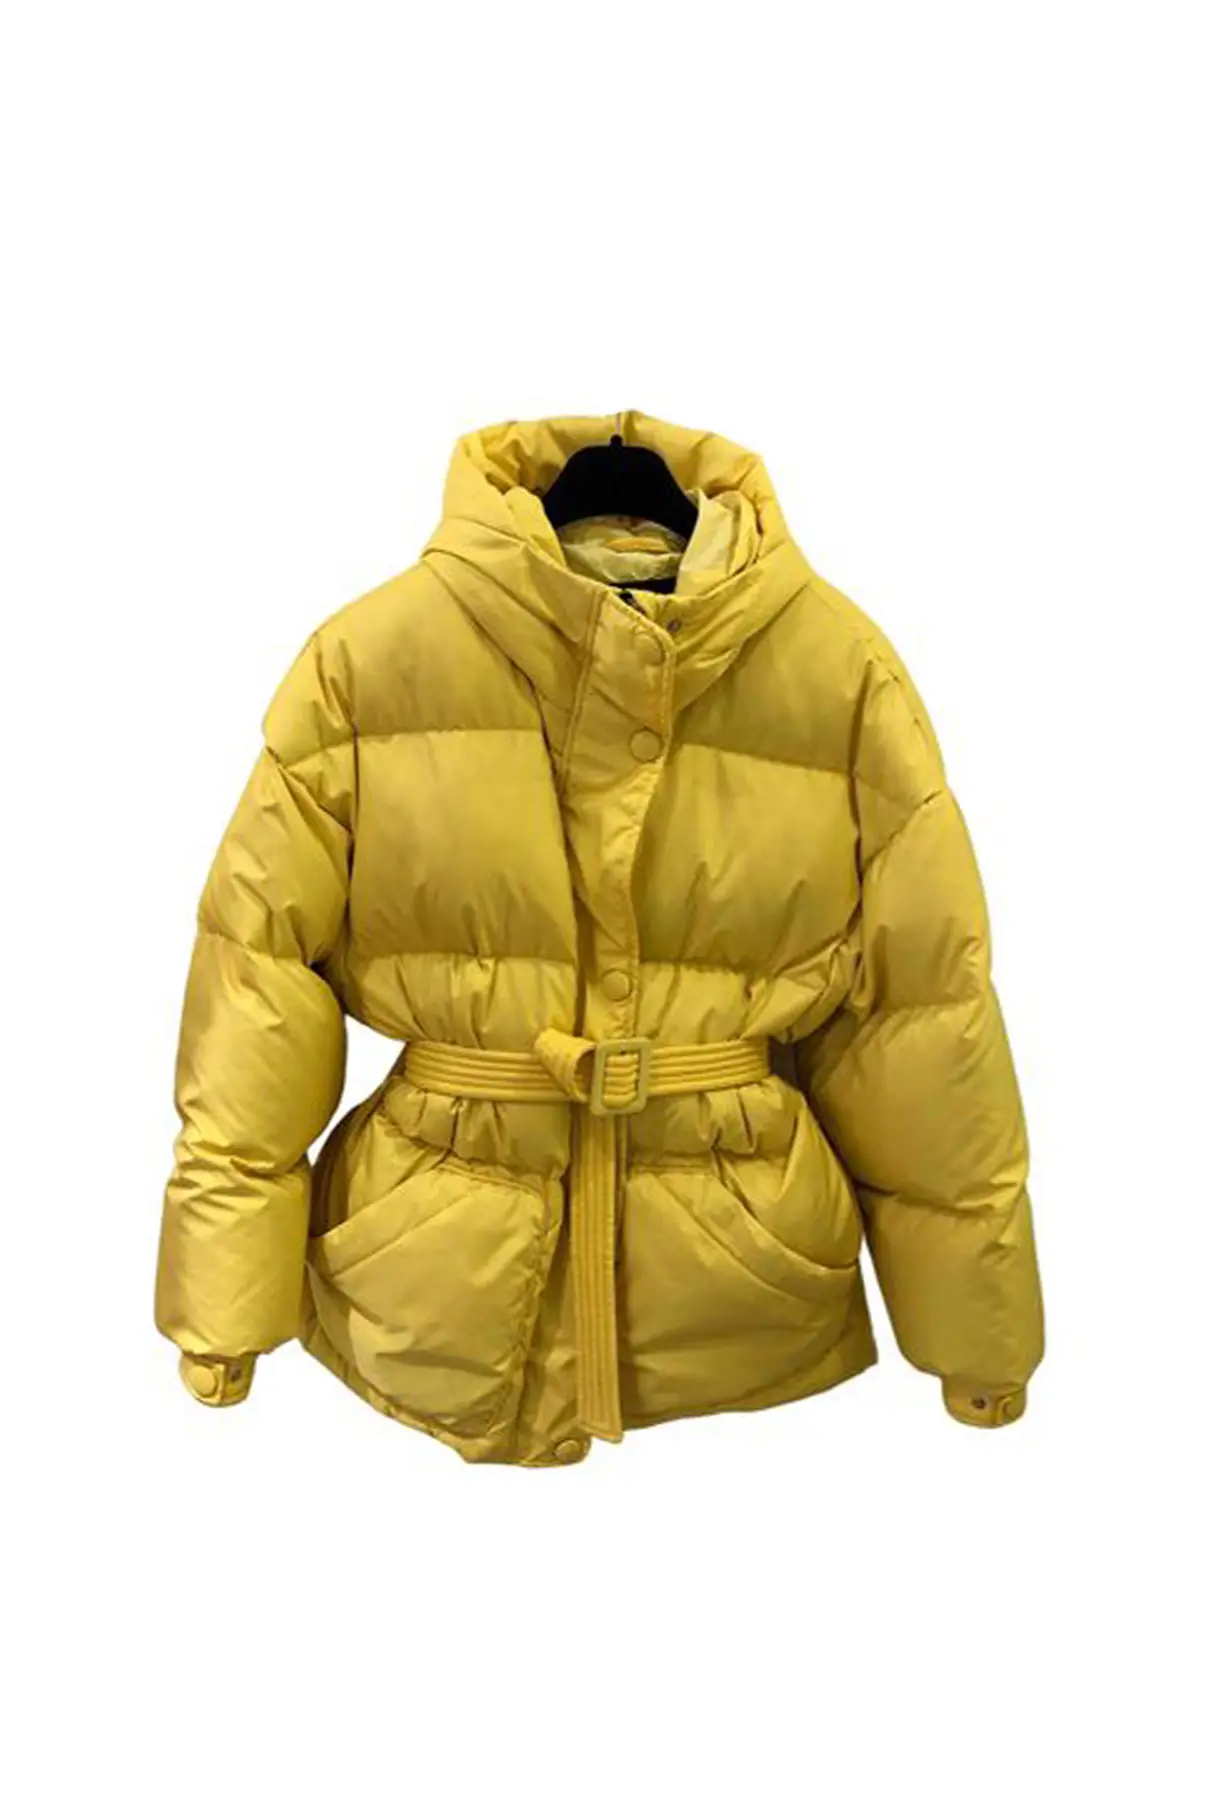 ienki-ienki-yellow-puffer-jacket.jpg